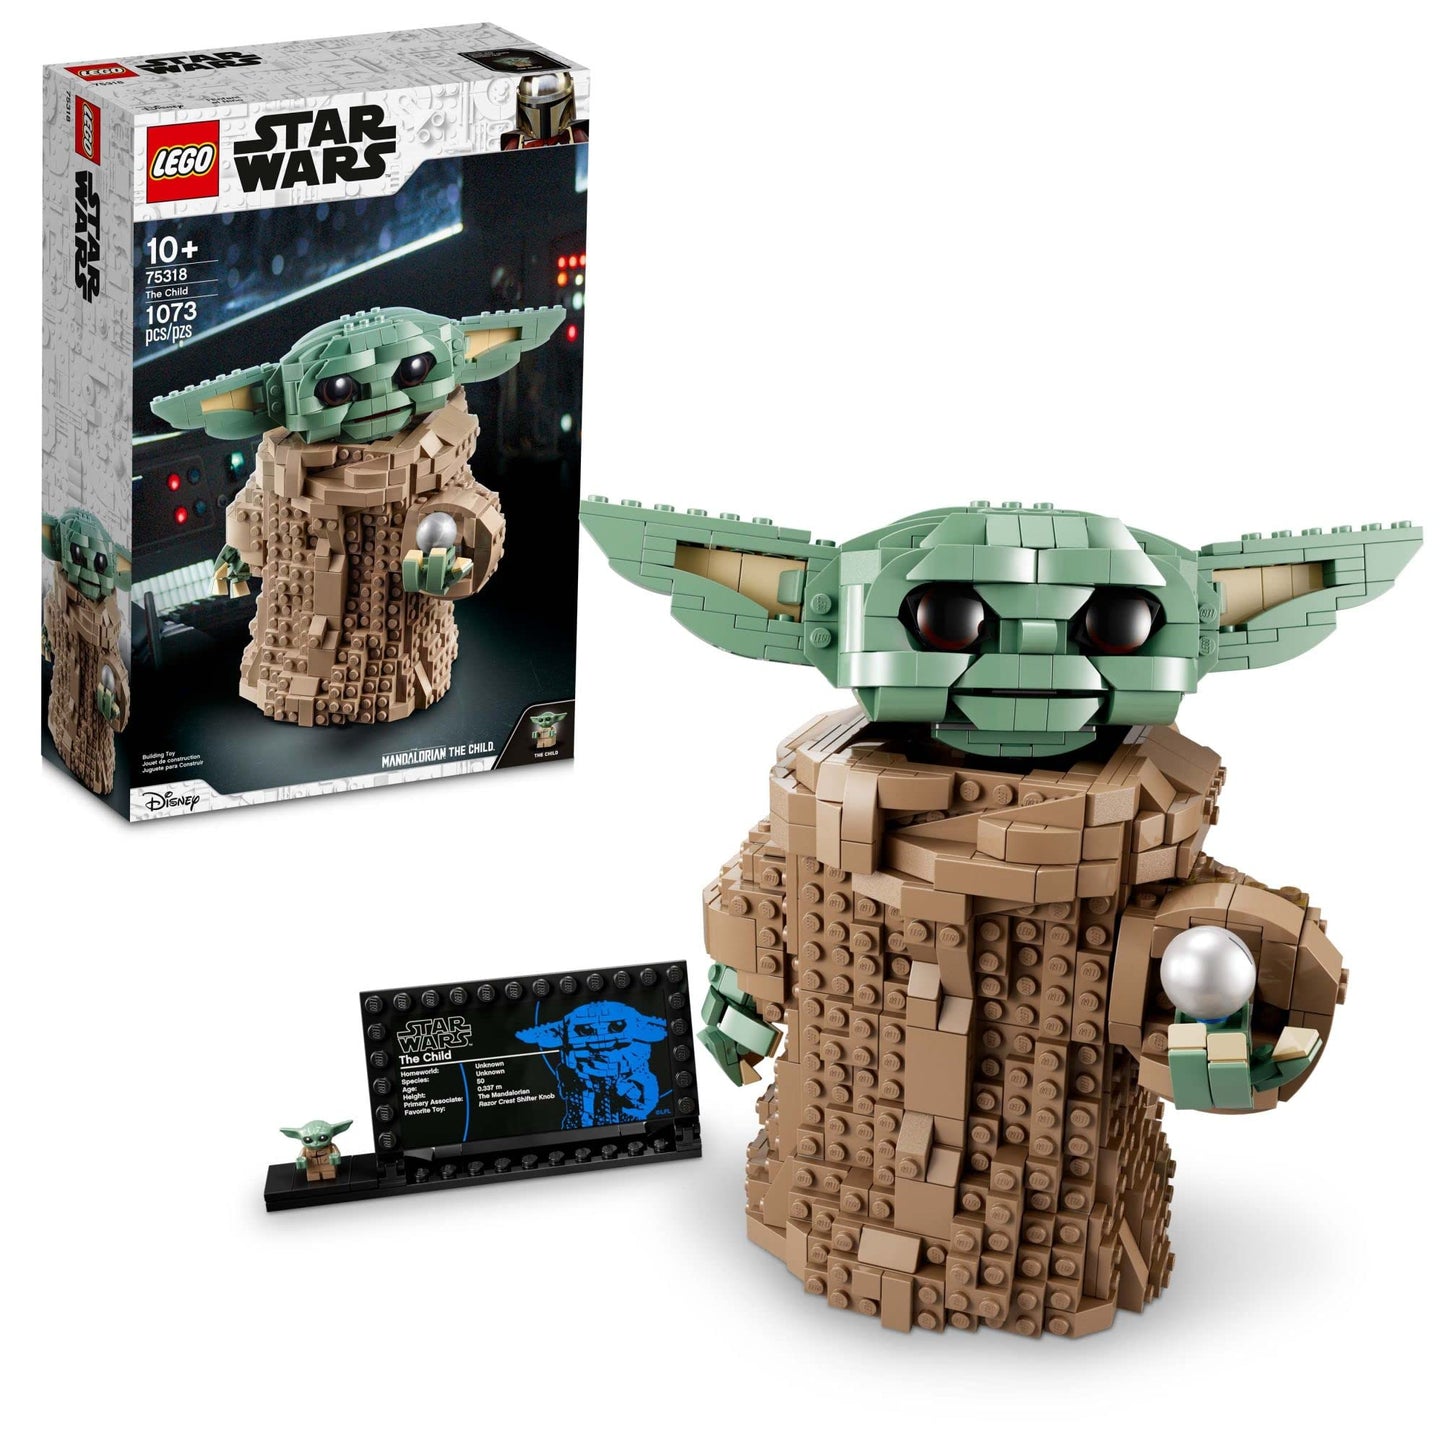 LEGO Star Wars: The Child 75318